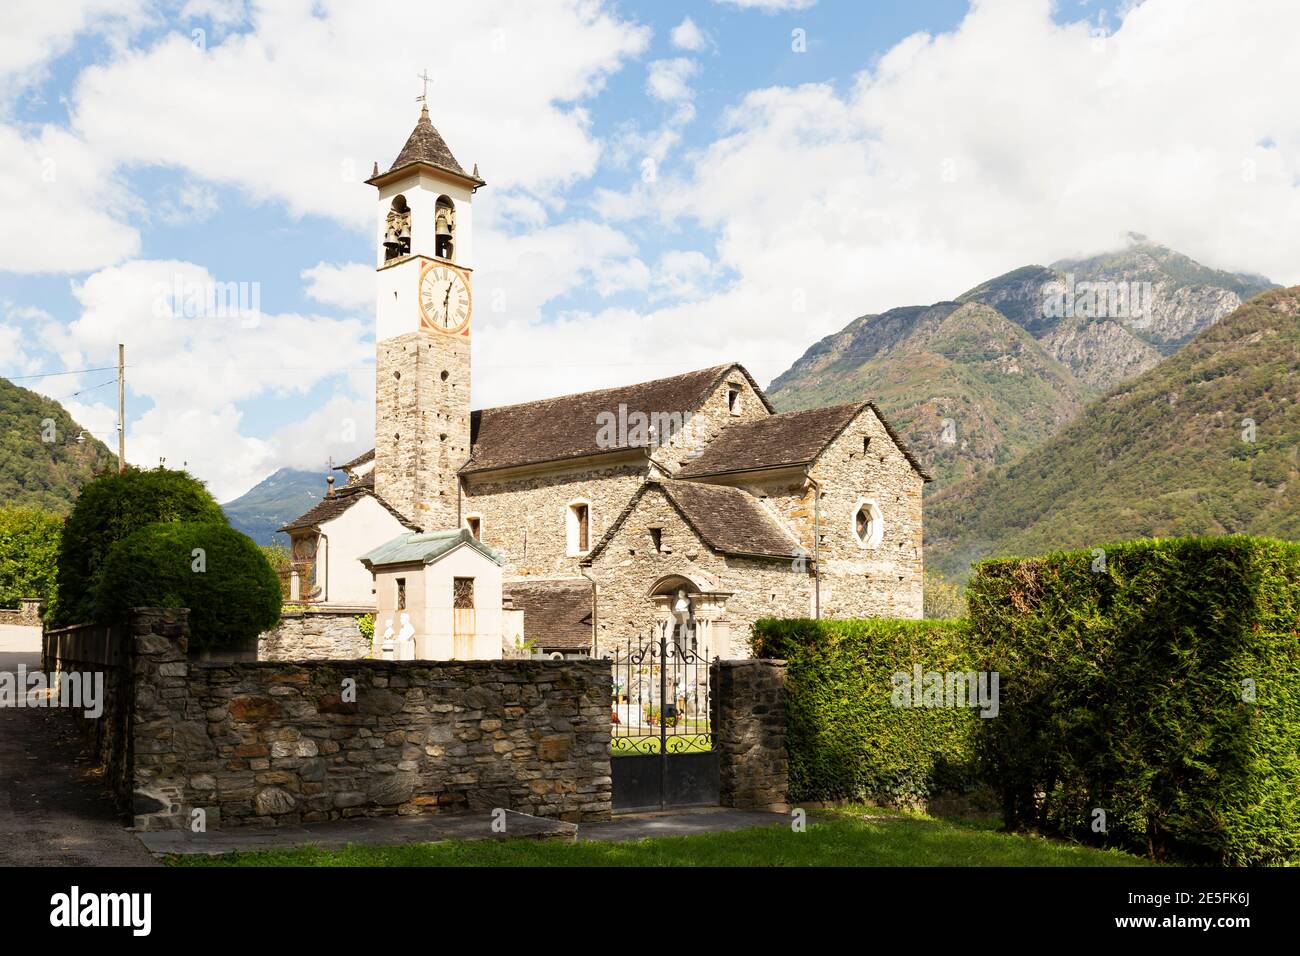 Svizzera, Aurigeno, settembre 2020. Storica chiesa cittadina Foto Stock